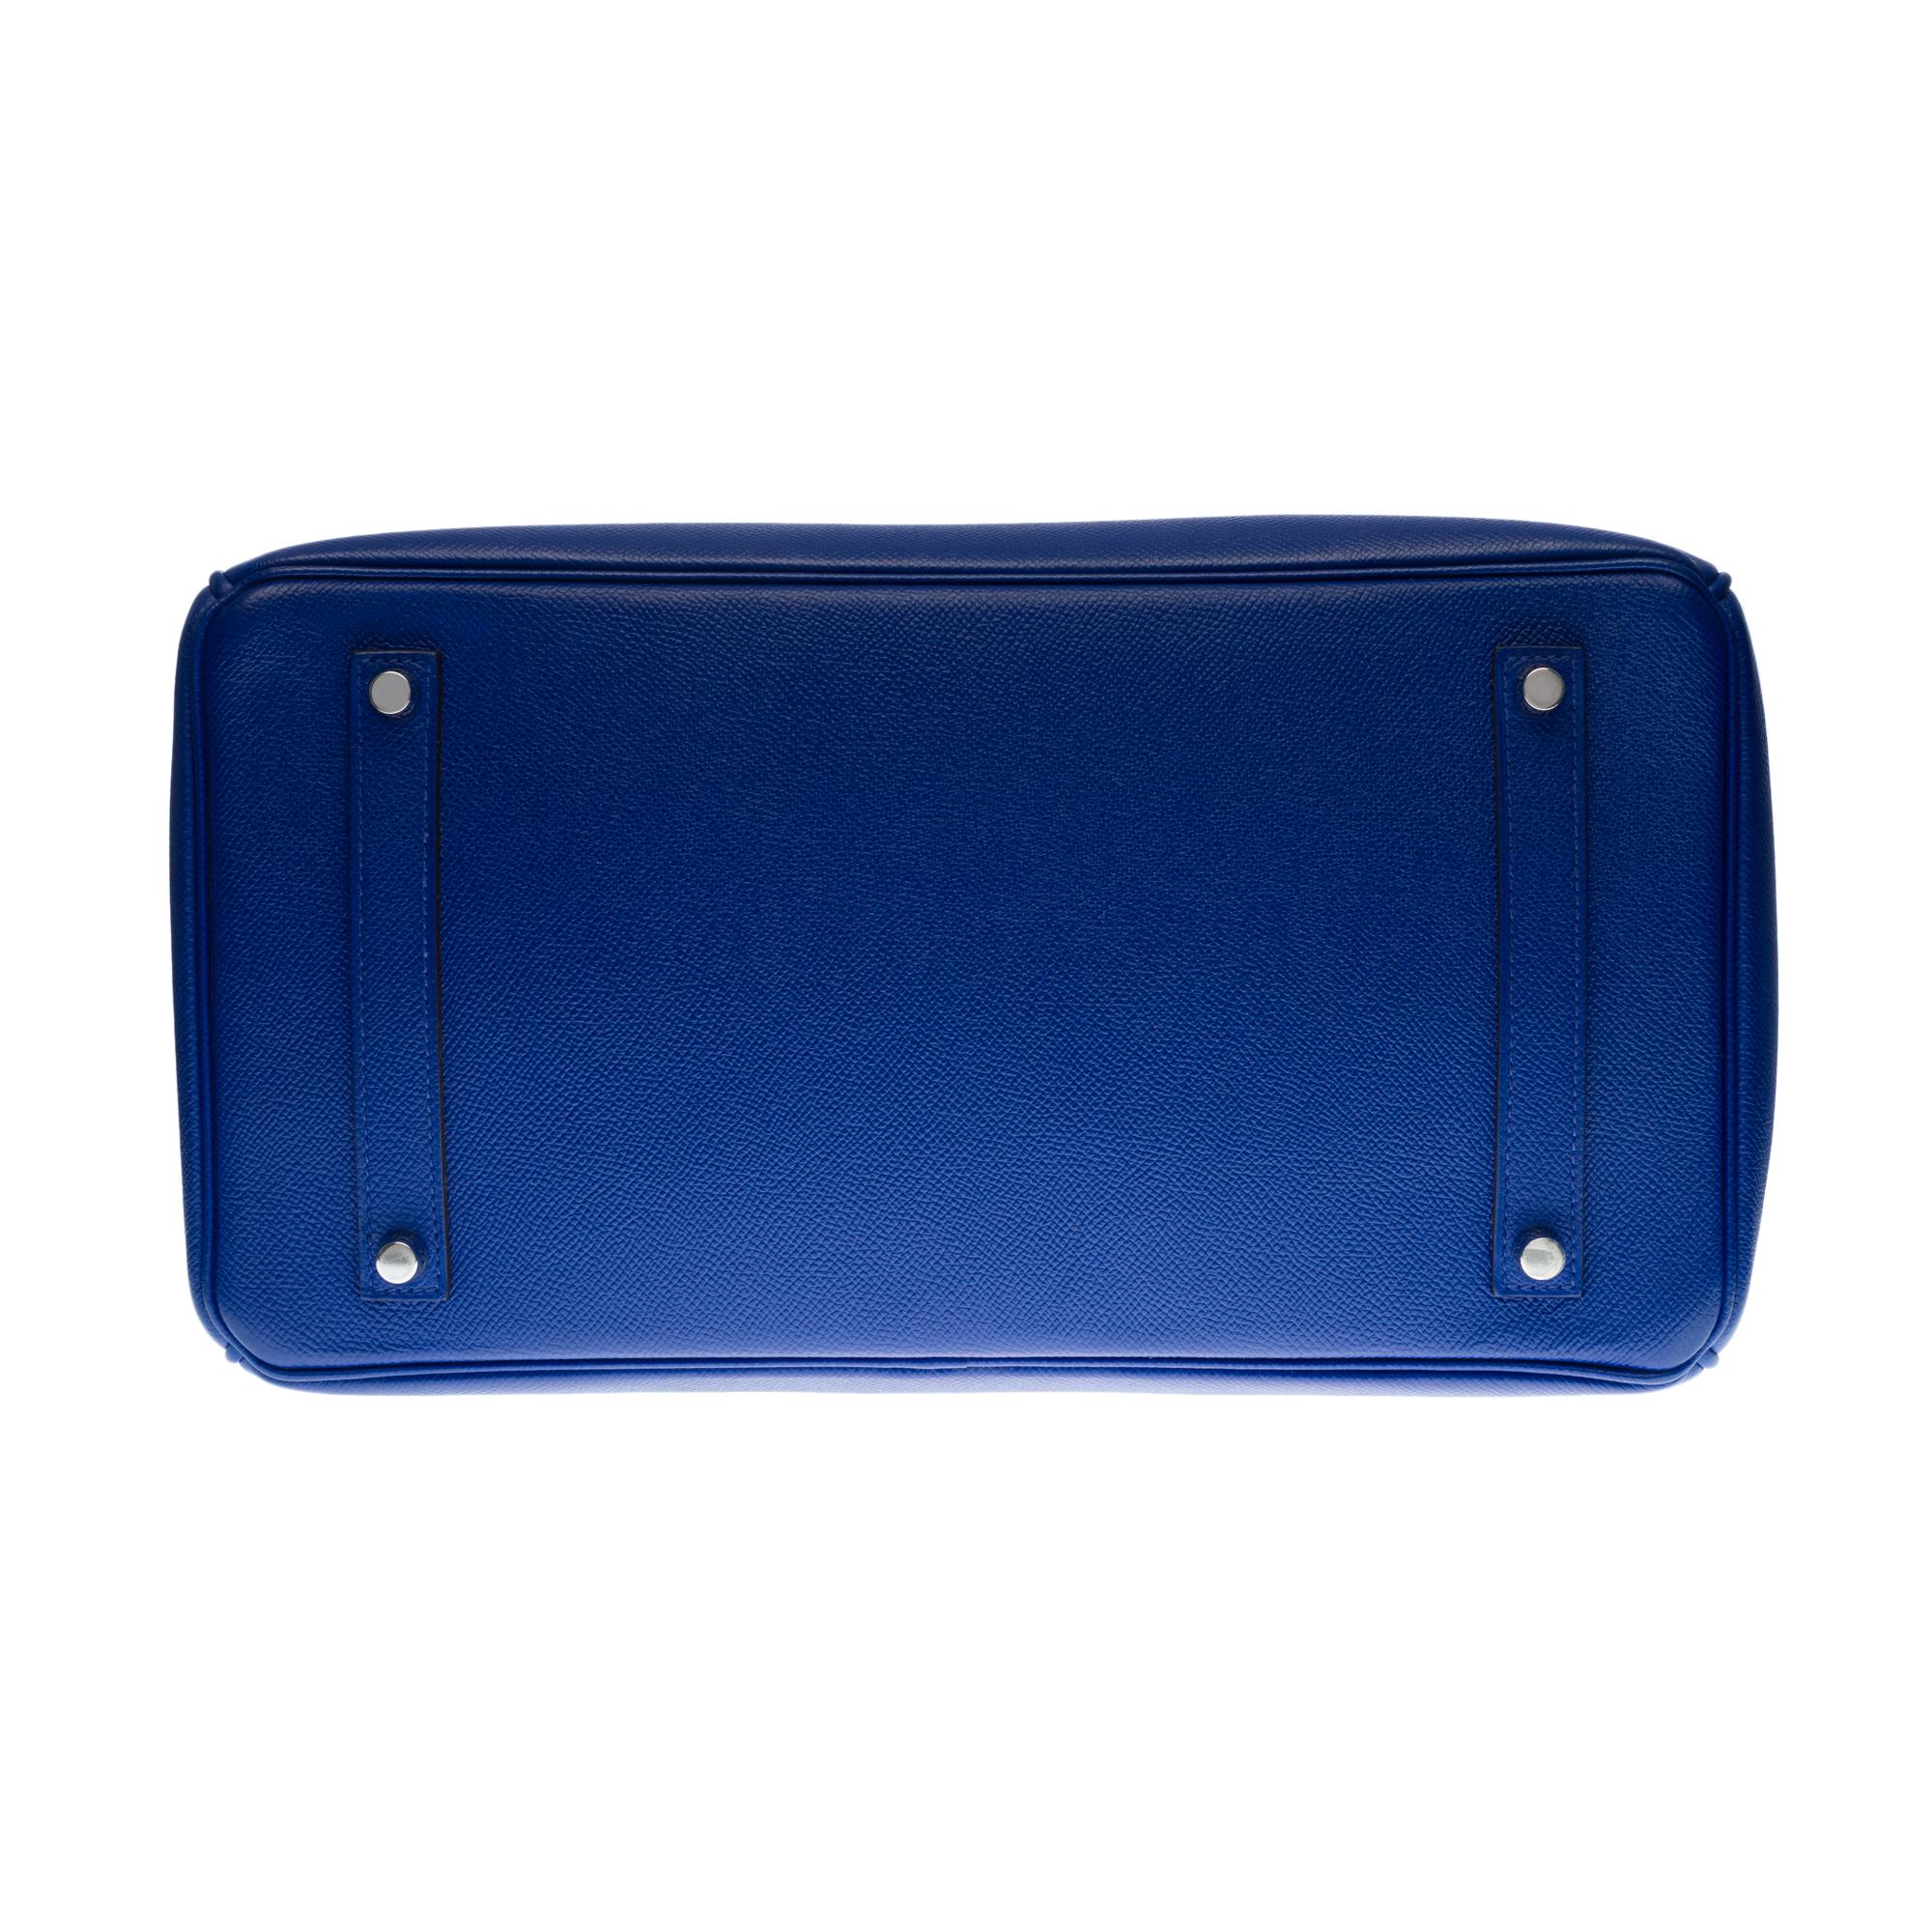 Hermès Birkin 35 handbag in bleu saphir epsom leather with silver hardware ! 1